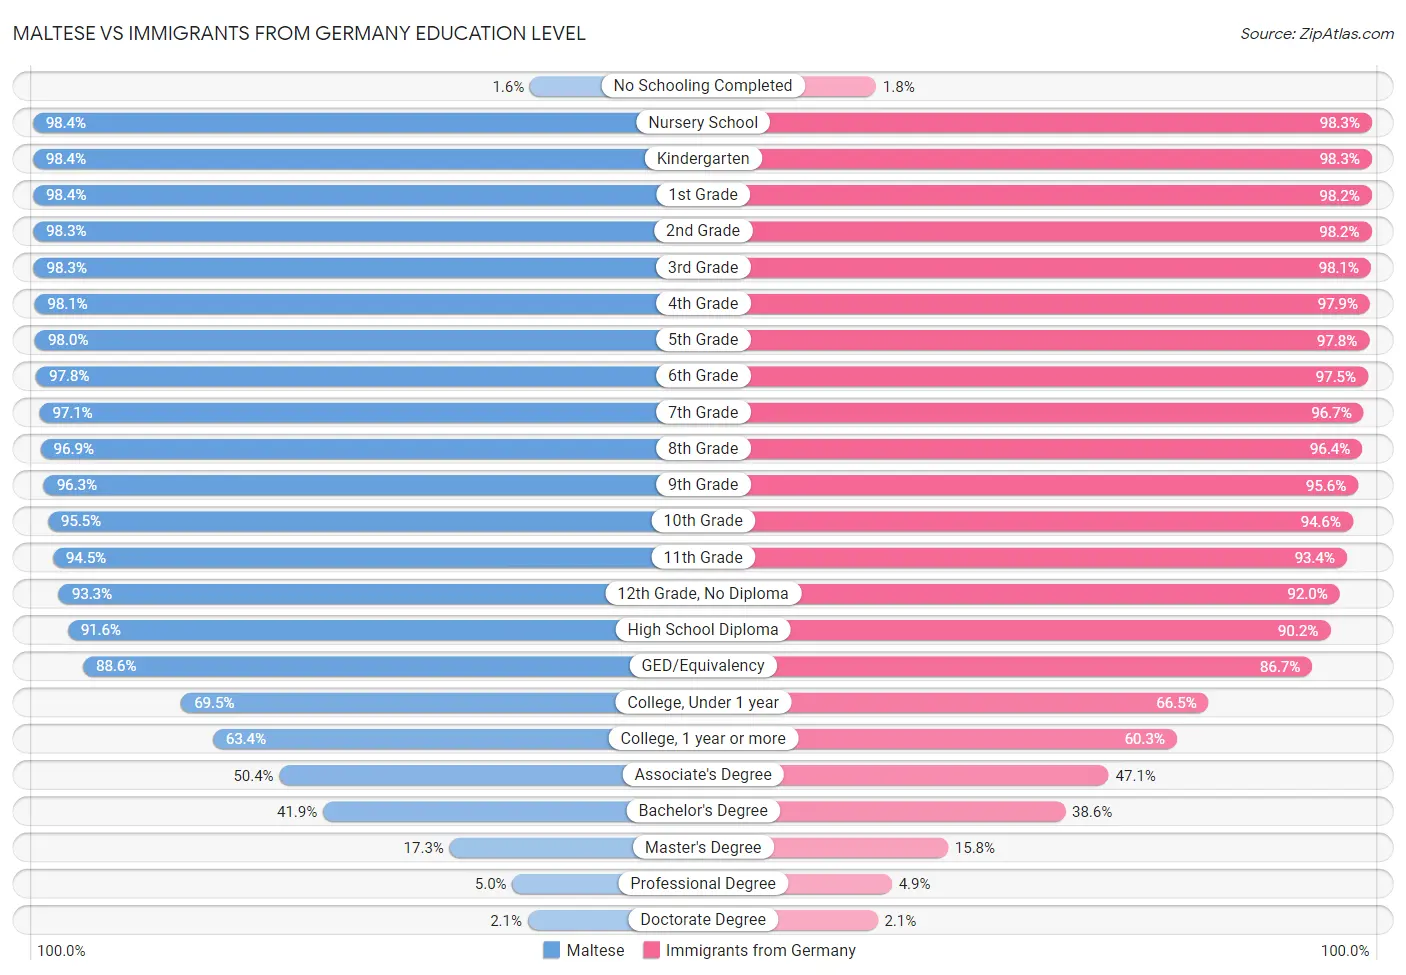 Maltese vs Immigrants from Germany Education Level